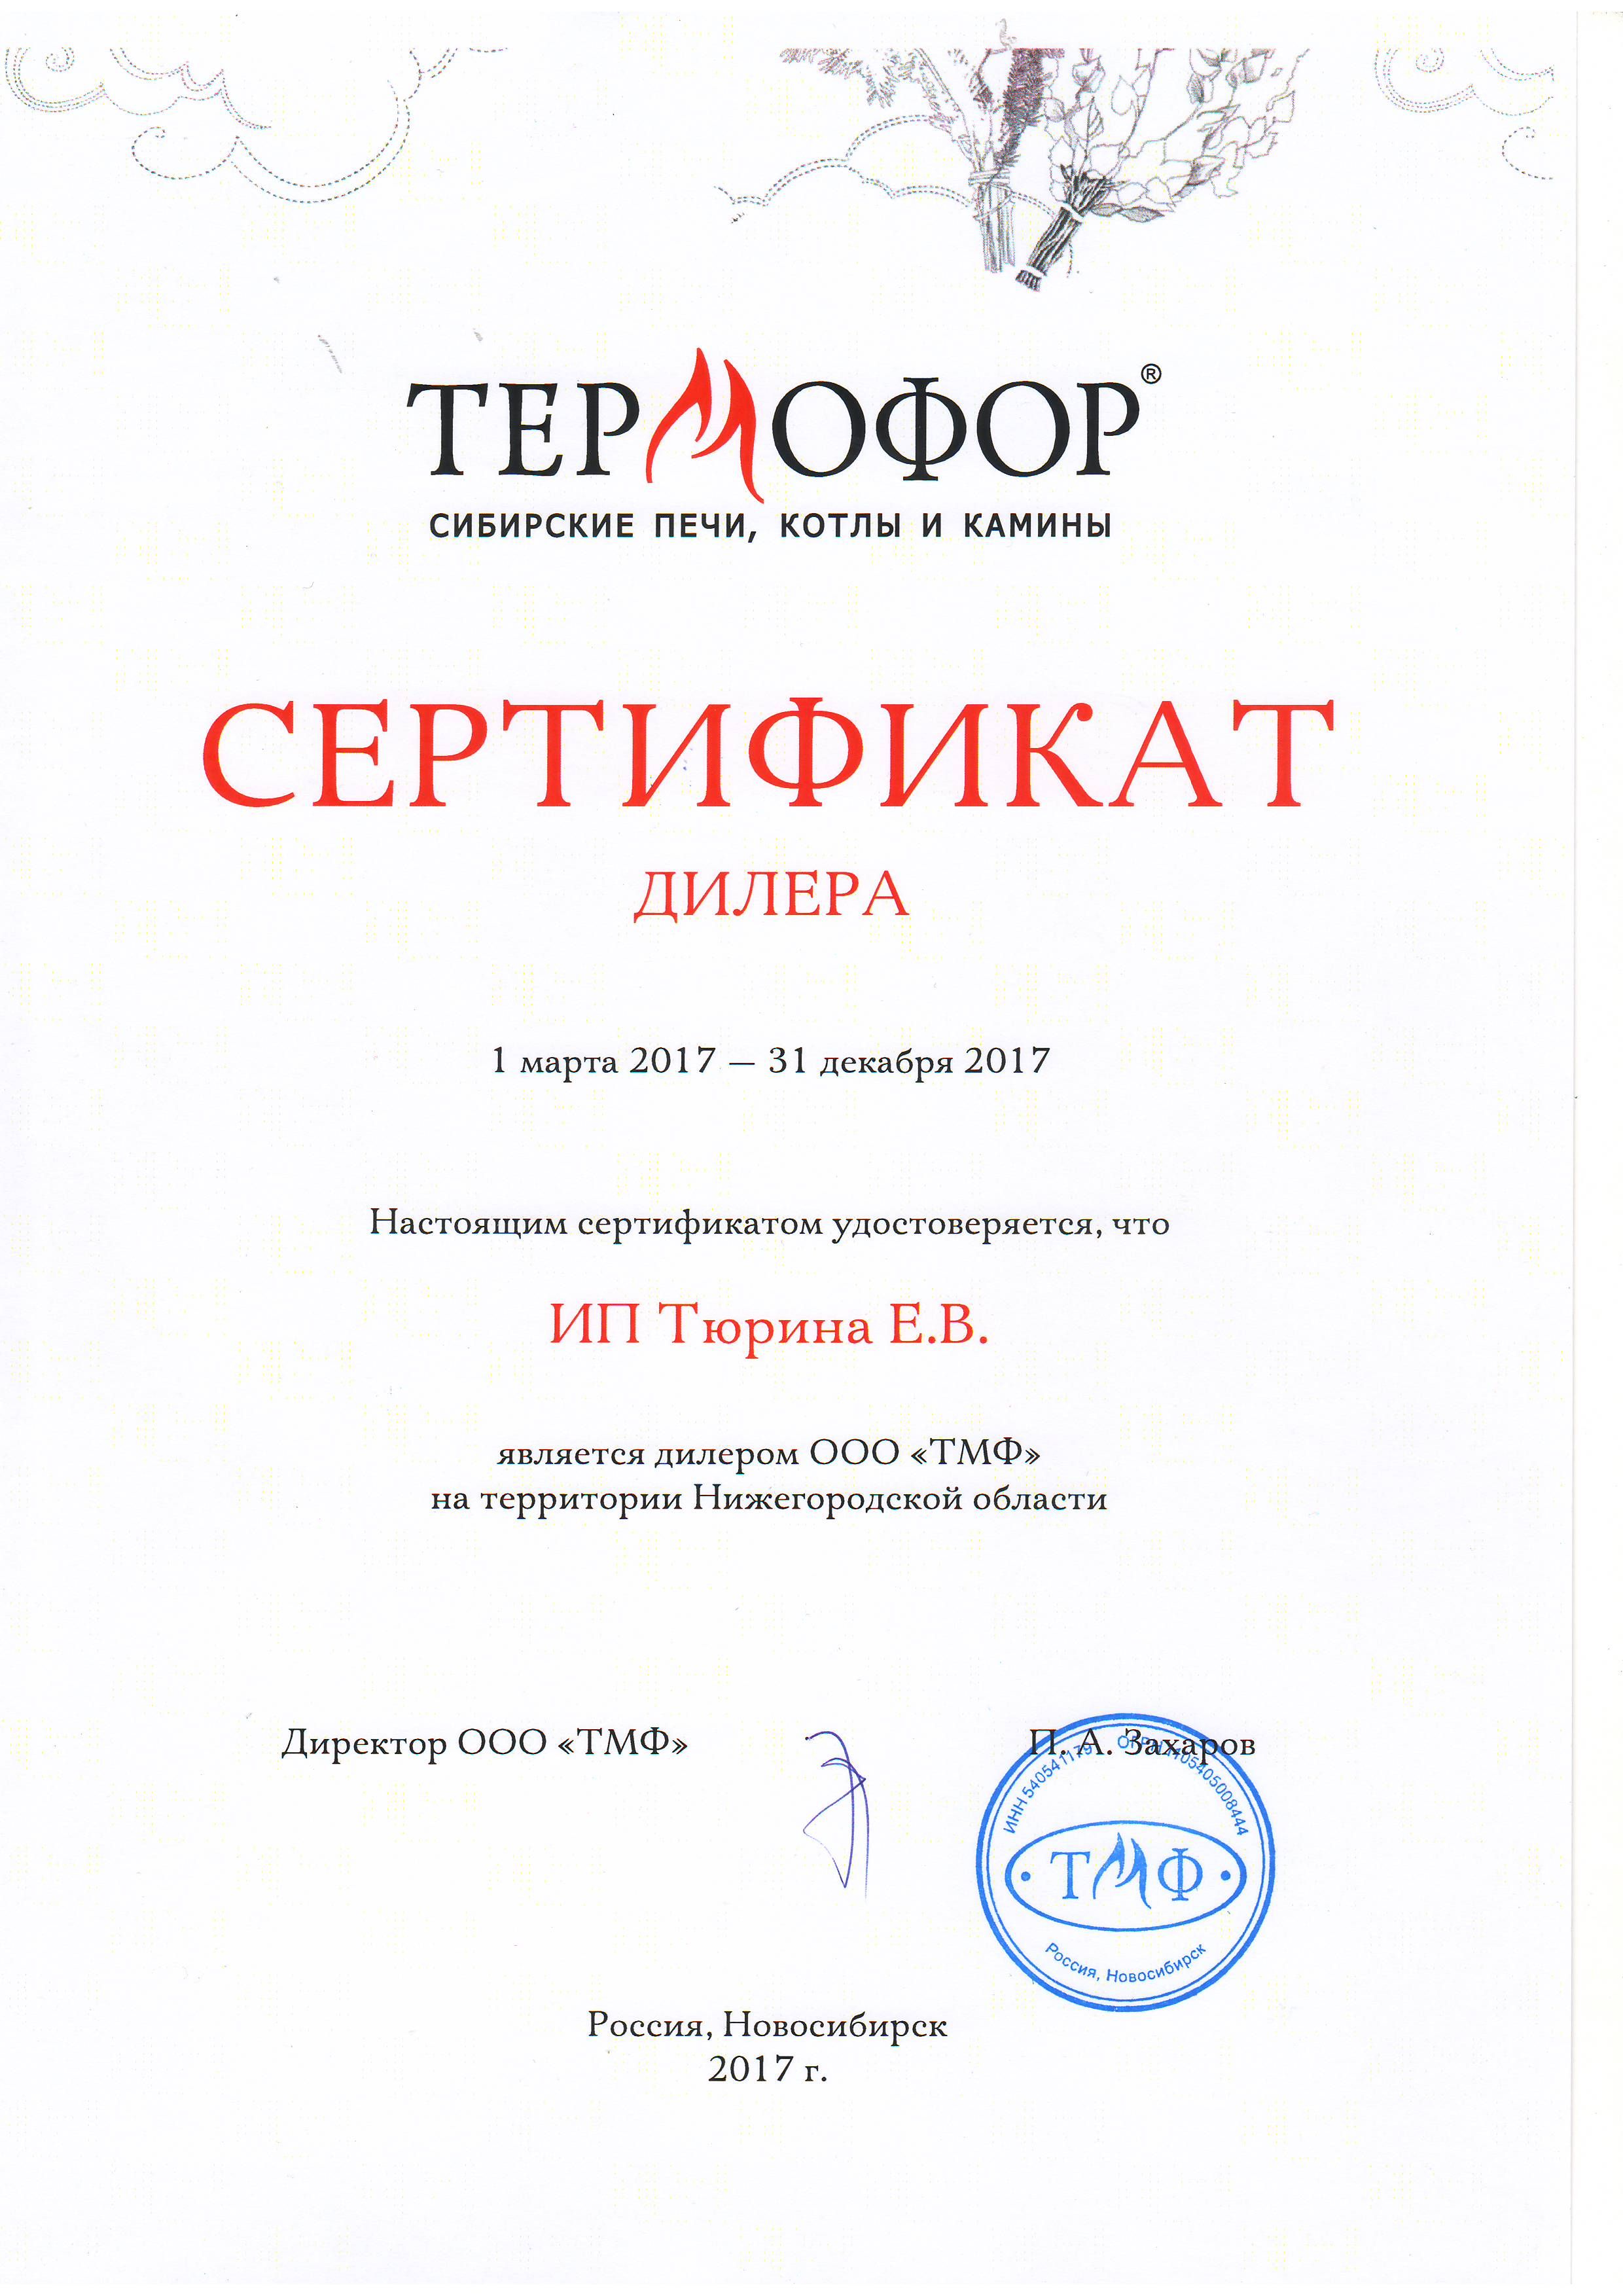 Термофор - сертификат дилера